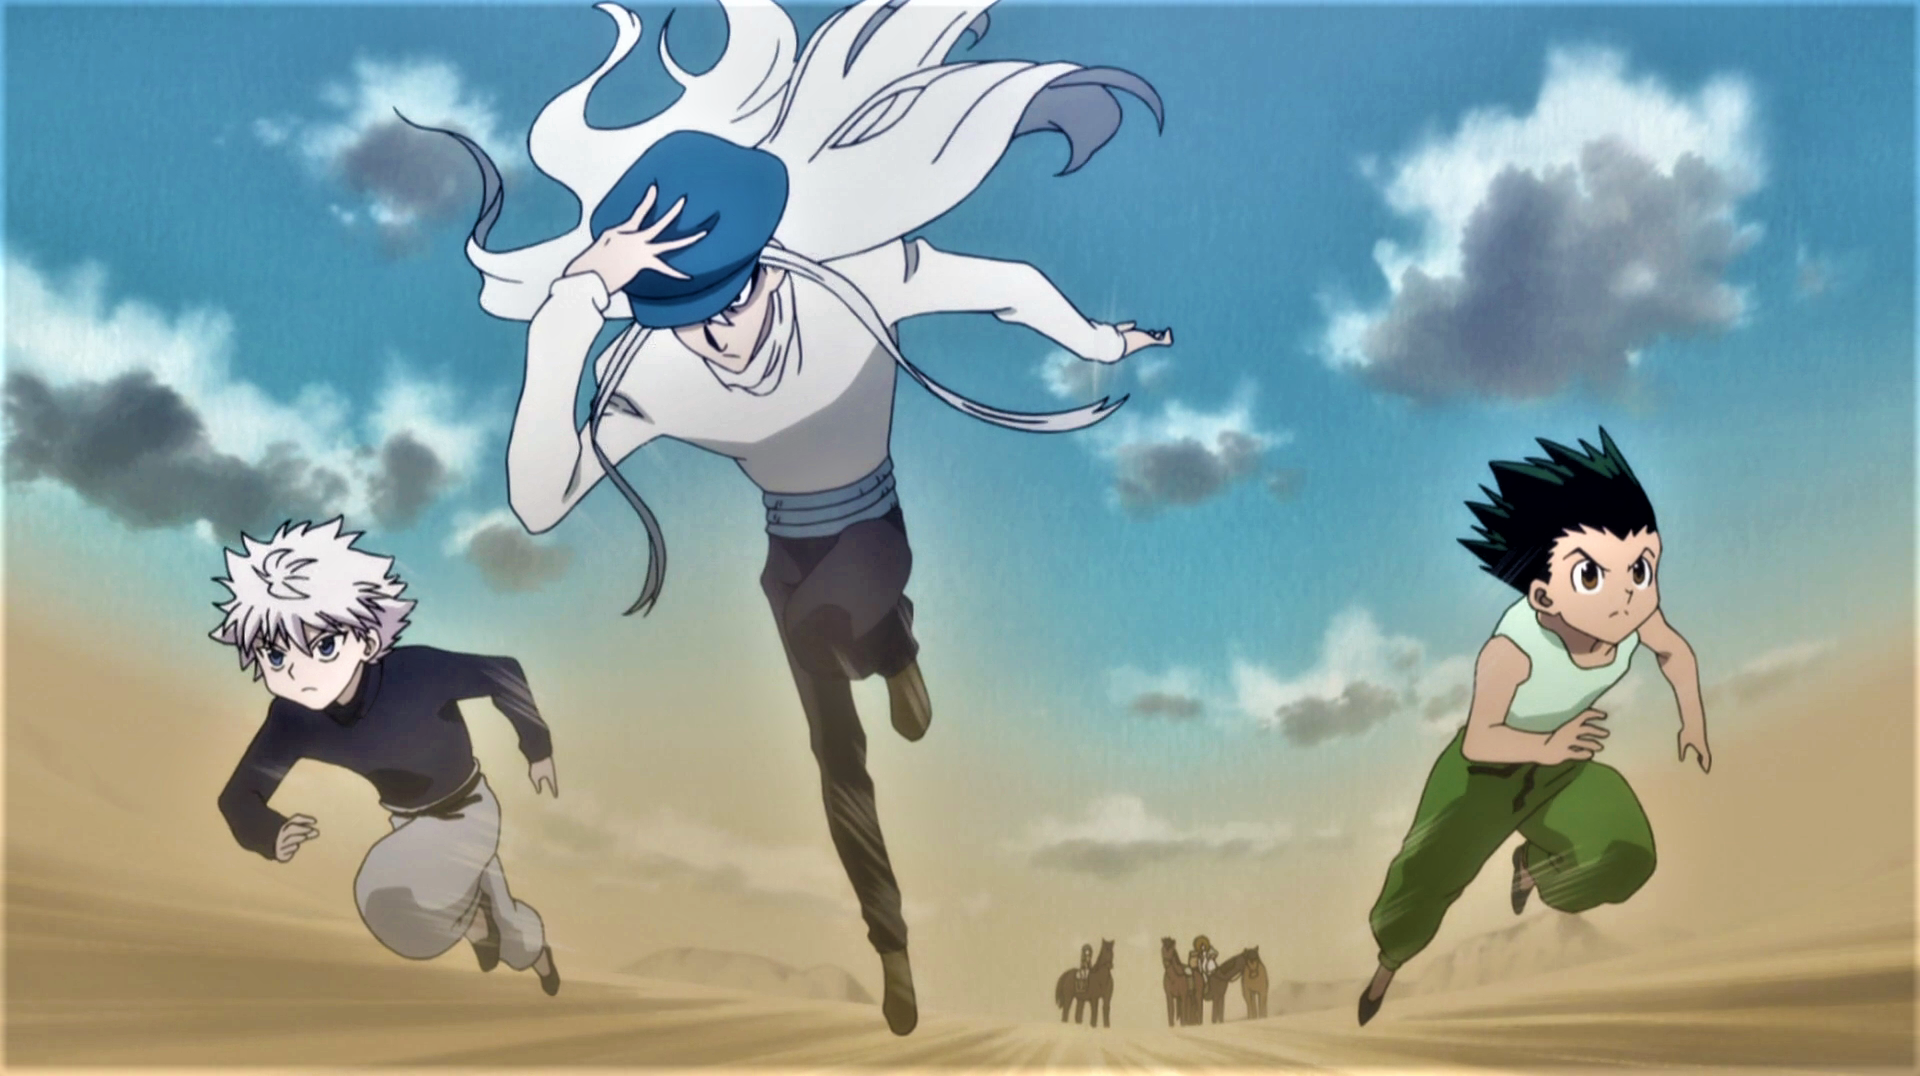 Hunter X Hunter Killua Zoldyck Gon Freecss Kite Running Sky Clouds White Hair Green Hair Anime Anime 1920x1076